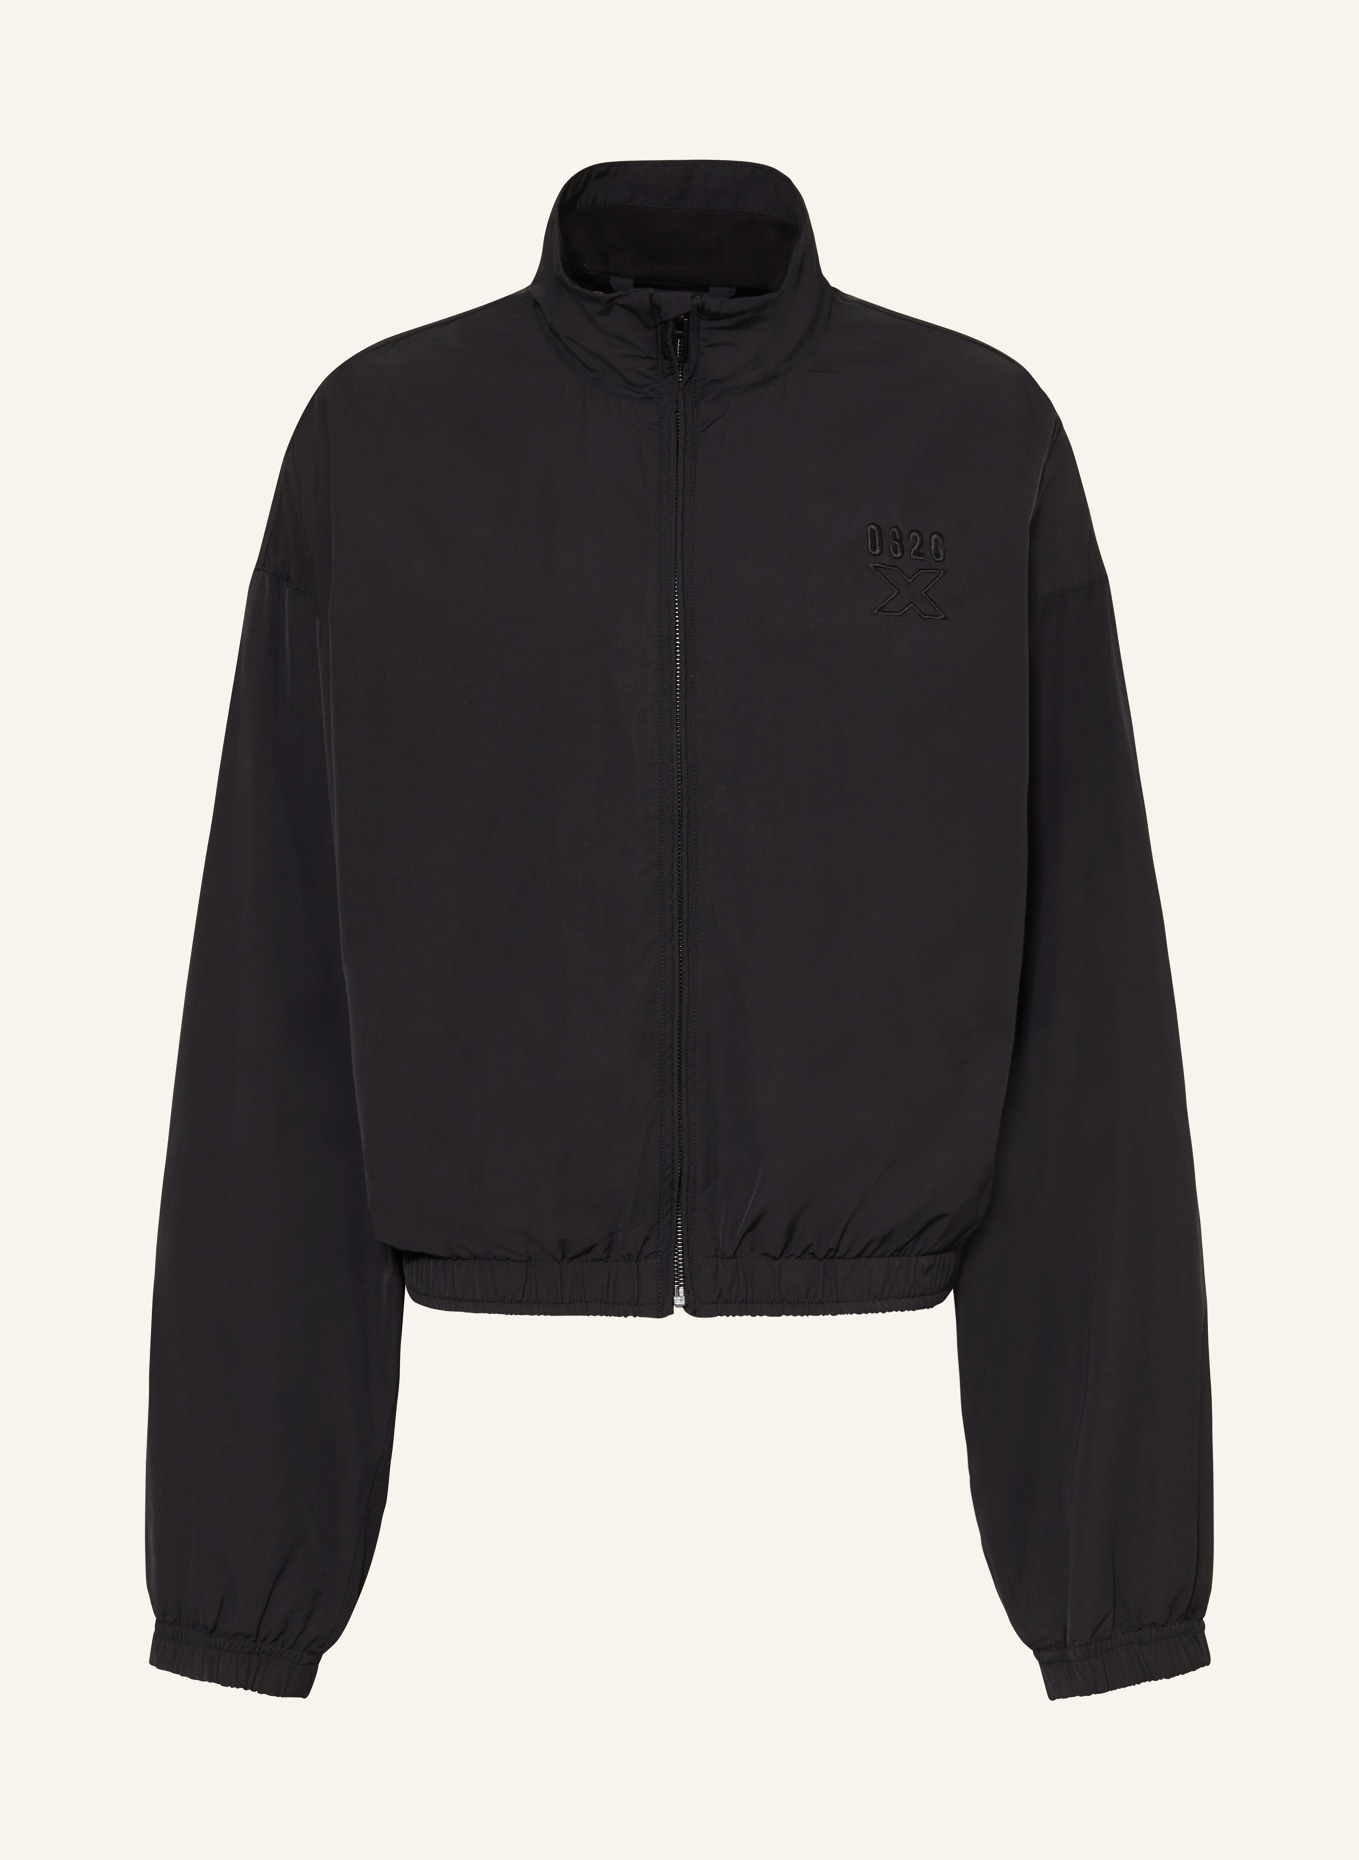 032c Bomber jacket BANANA SLEEVE, Color: BLACK (Image 1)